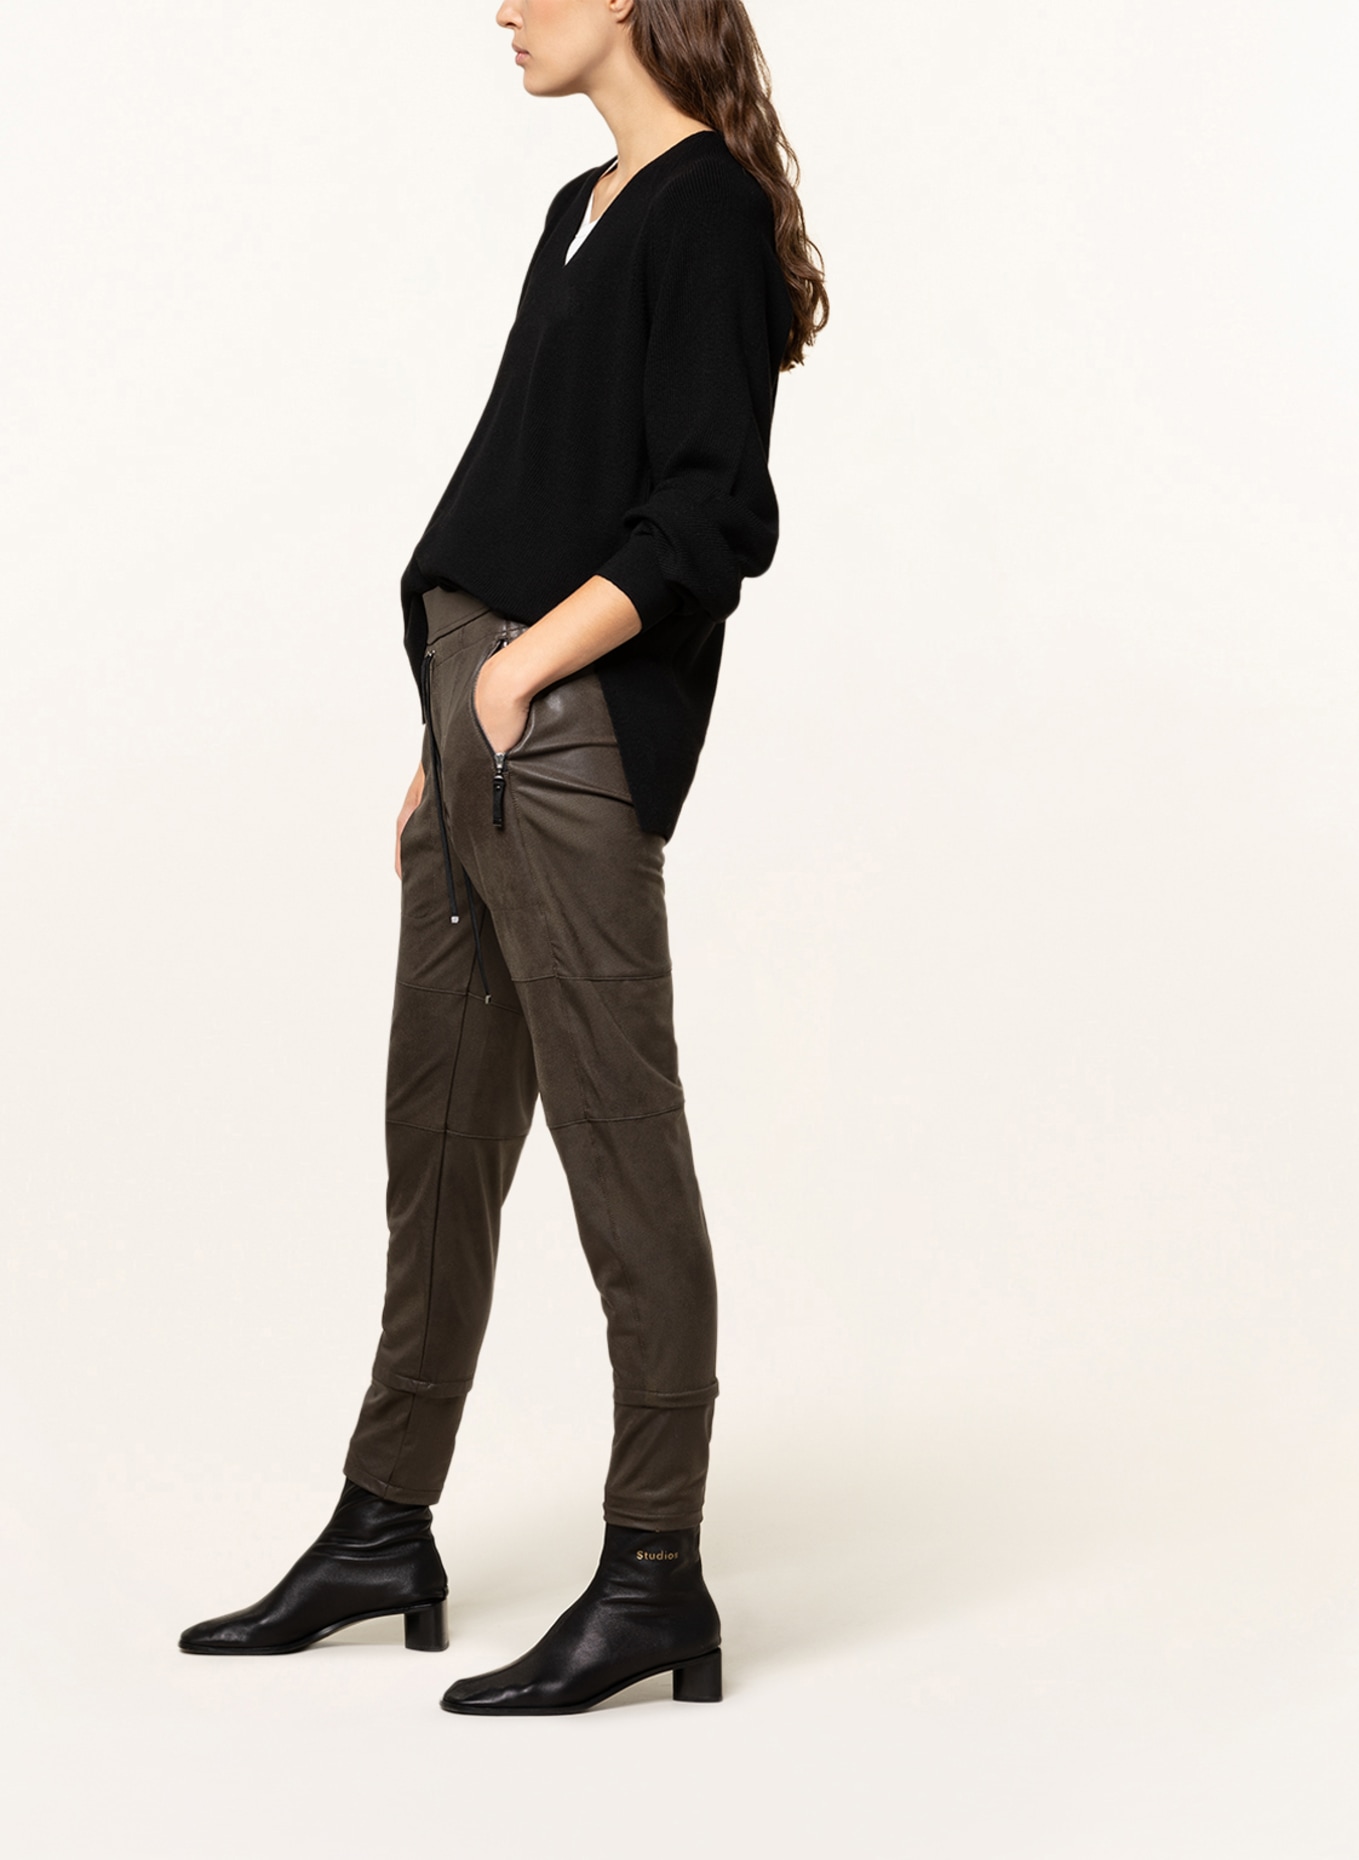 RAFFAELLO ROSSI Trousers CANDY in leather look, Color: KHAKI (Image 4)